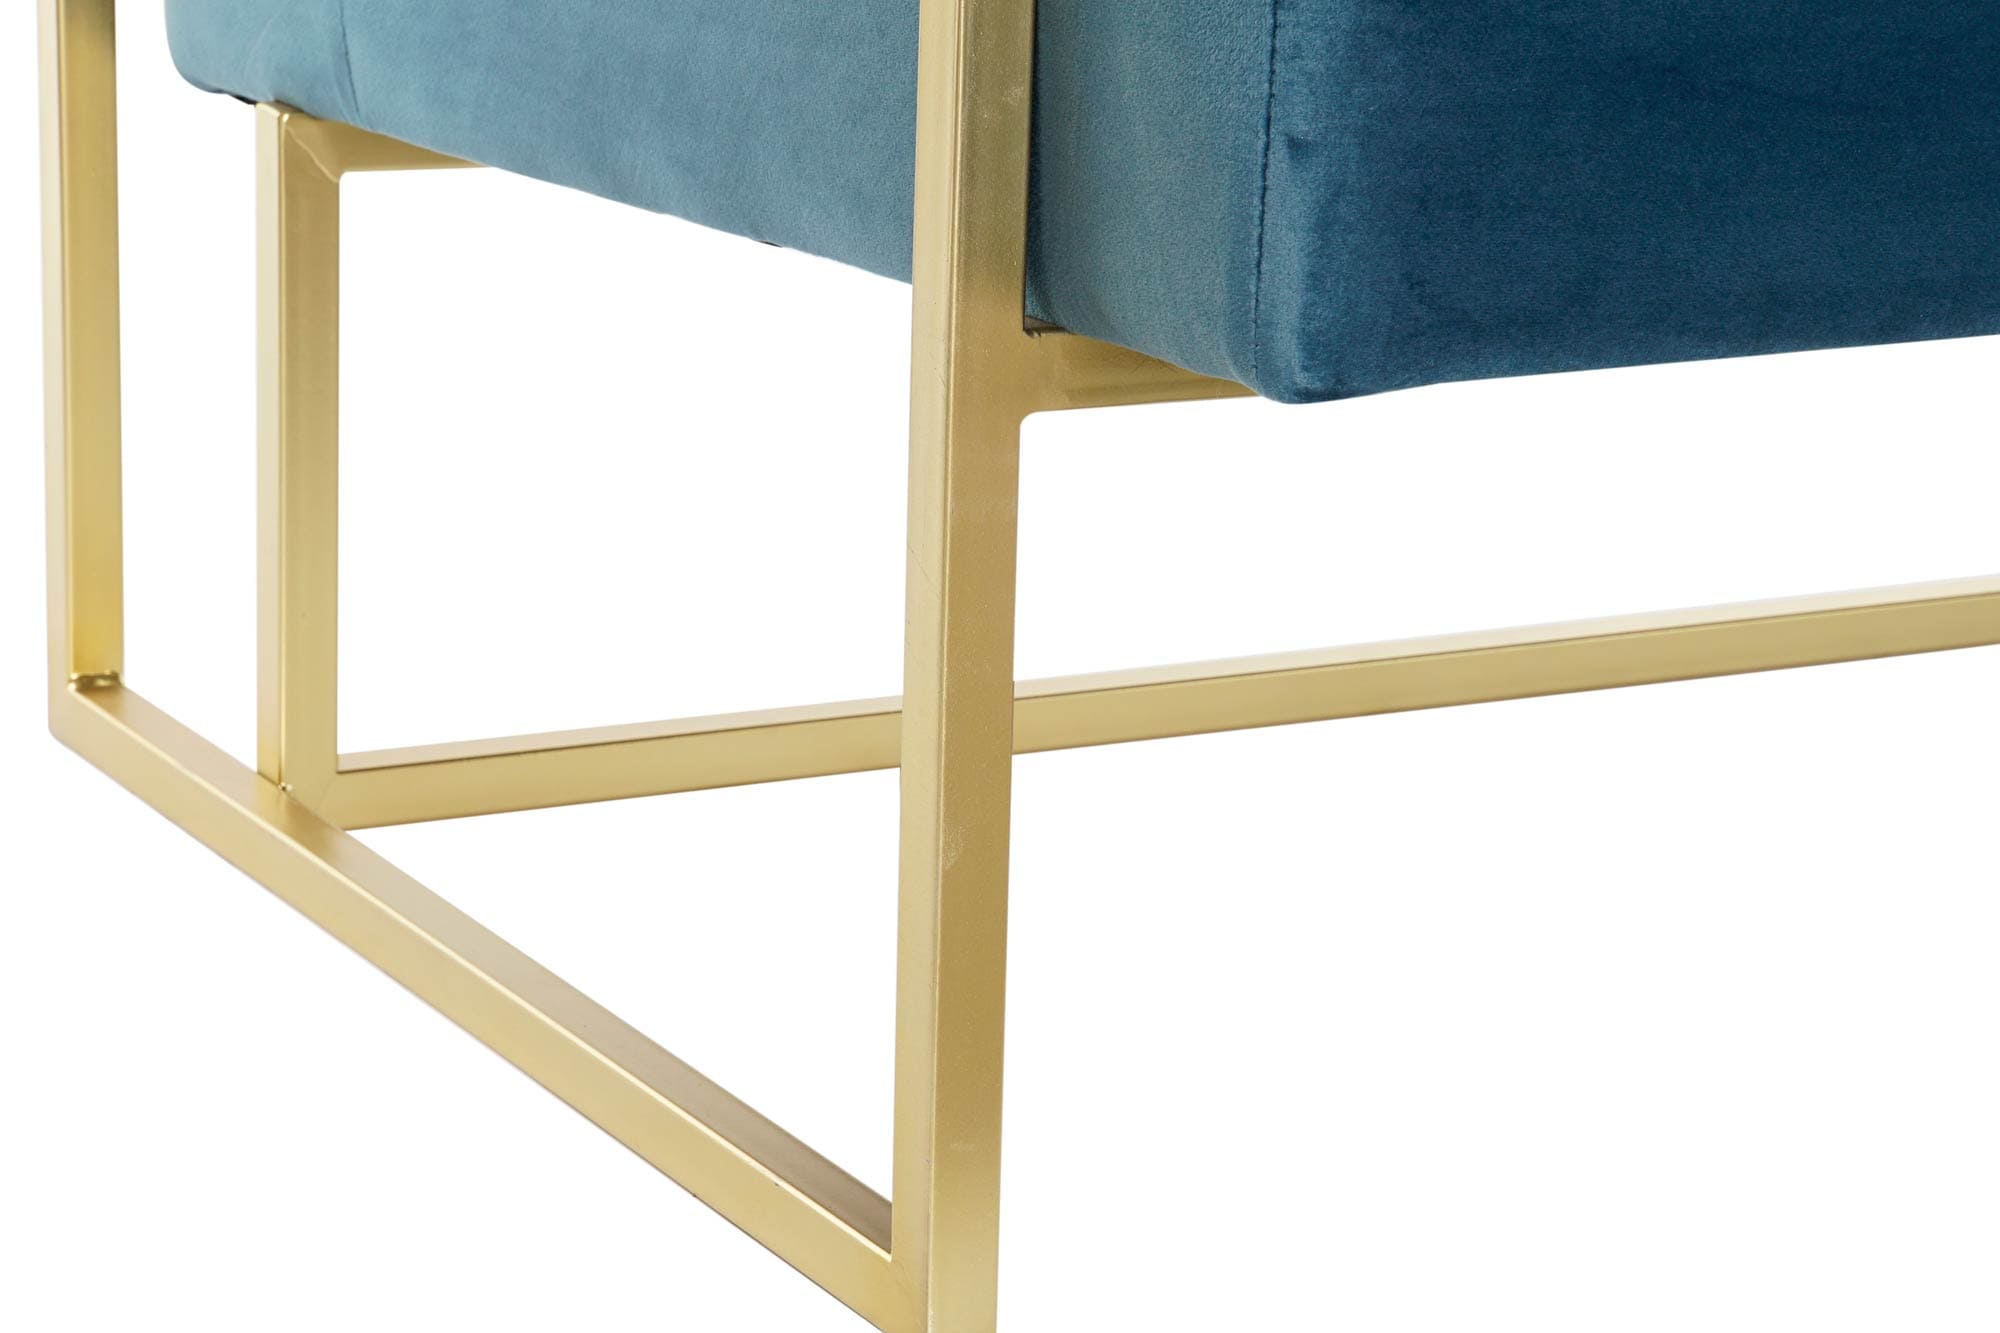 Duck Blue Velvet Sofa and Gold Metal Frame - Contemporary Elegance for Your Living Room